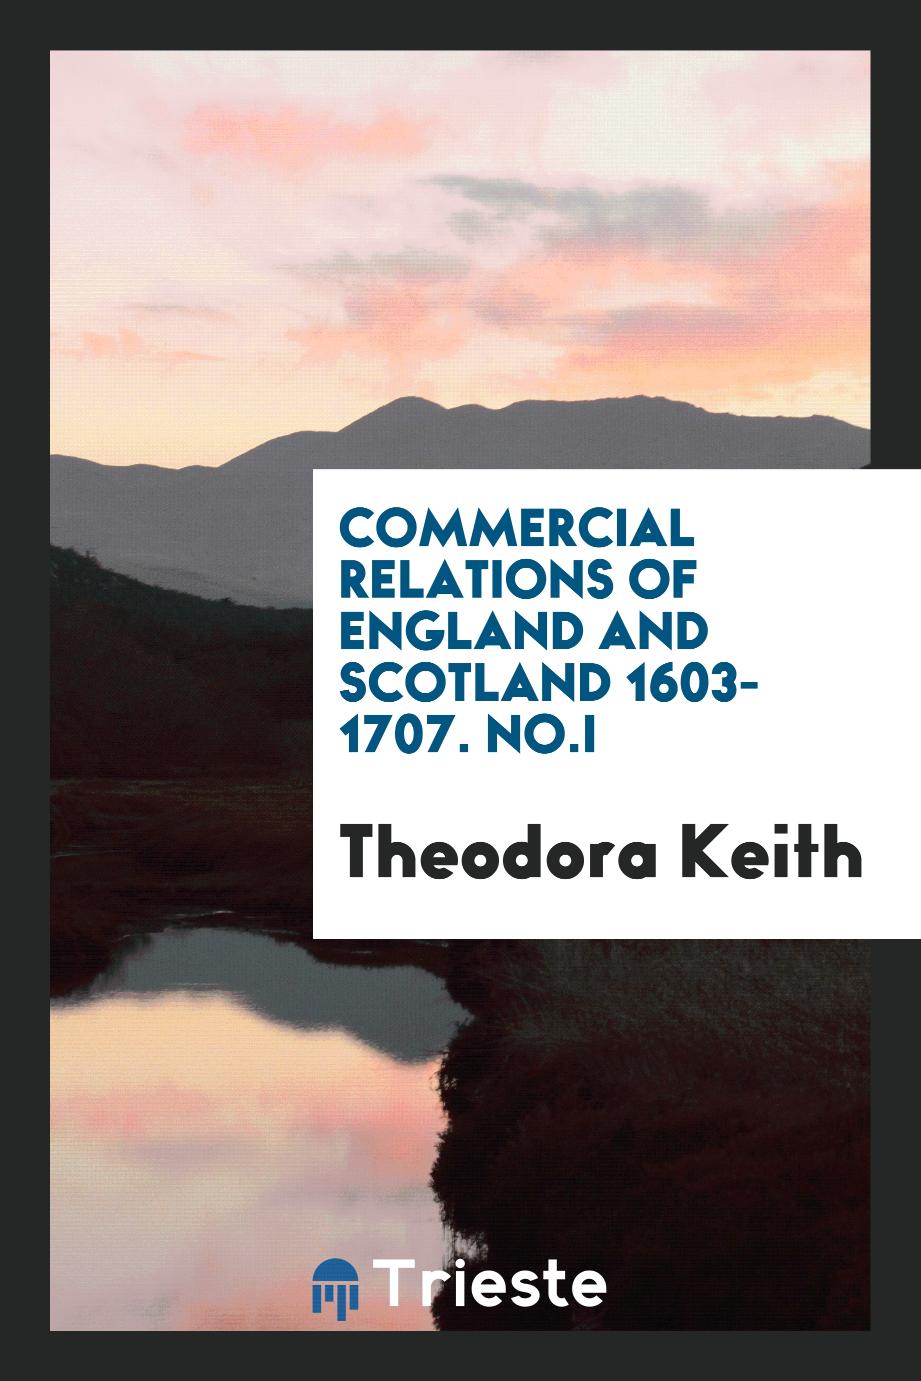 Commercial relations of England and Scotland 1603-1707. No.I